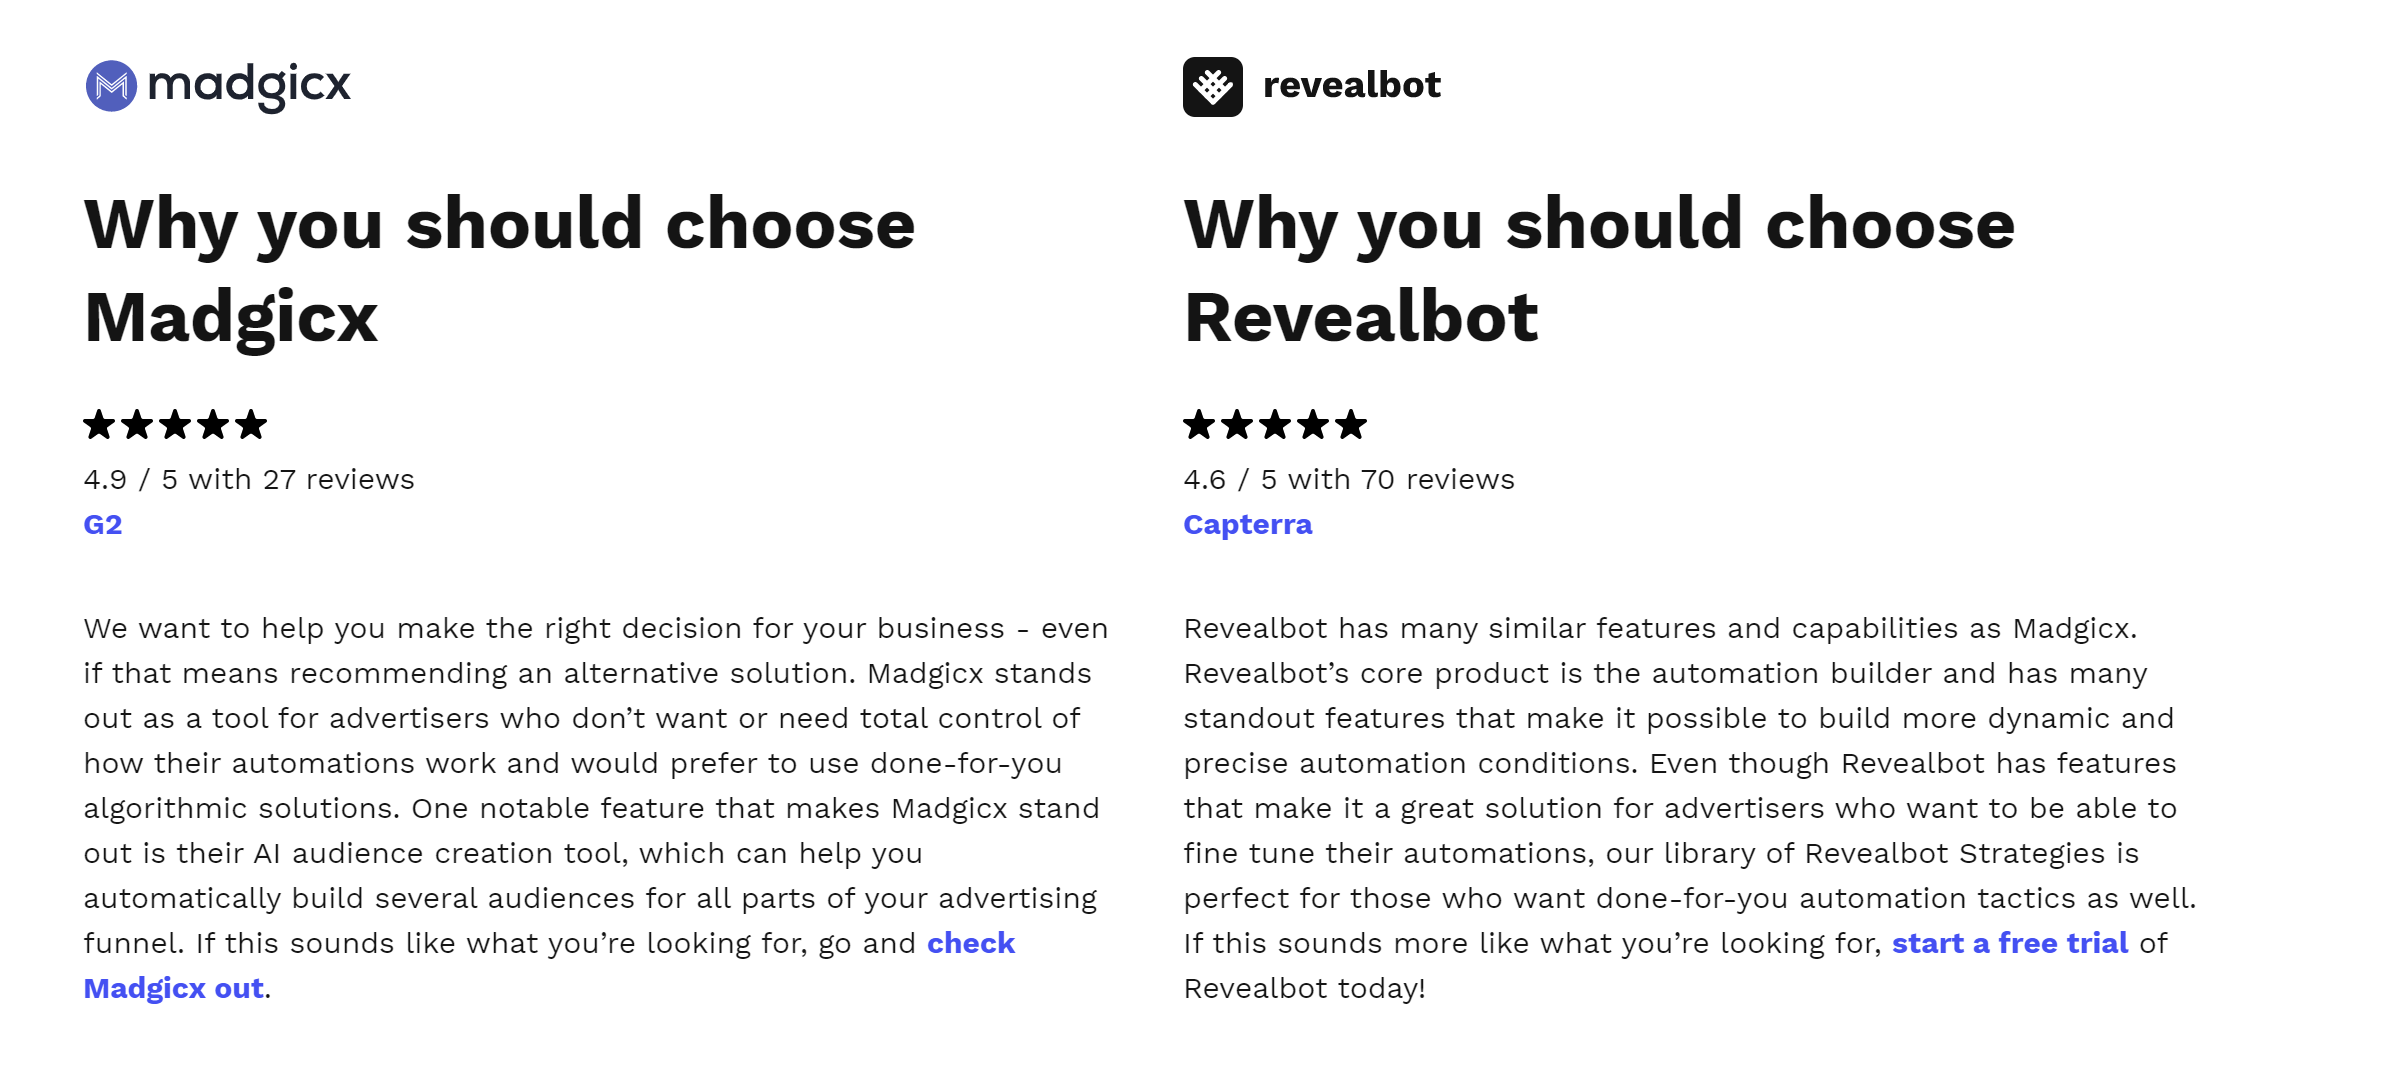 Madgicx vs Revealbot